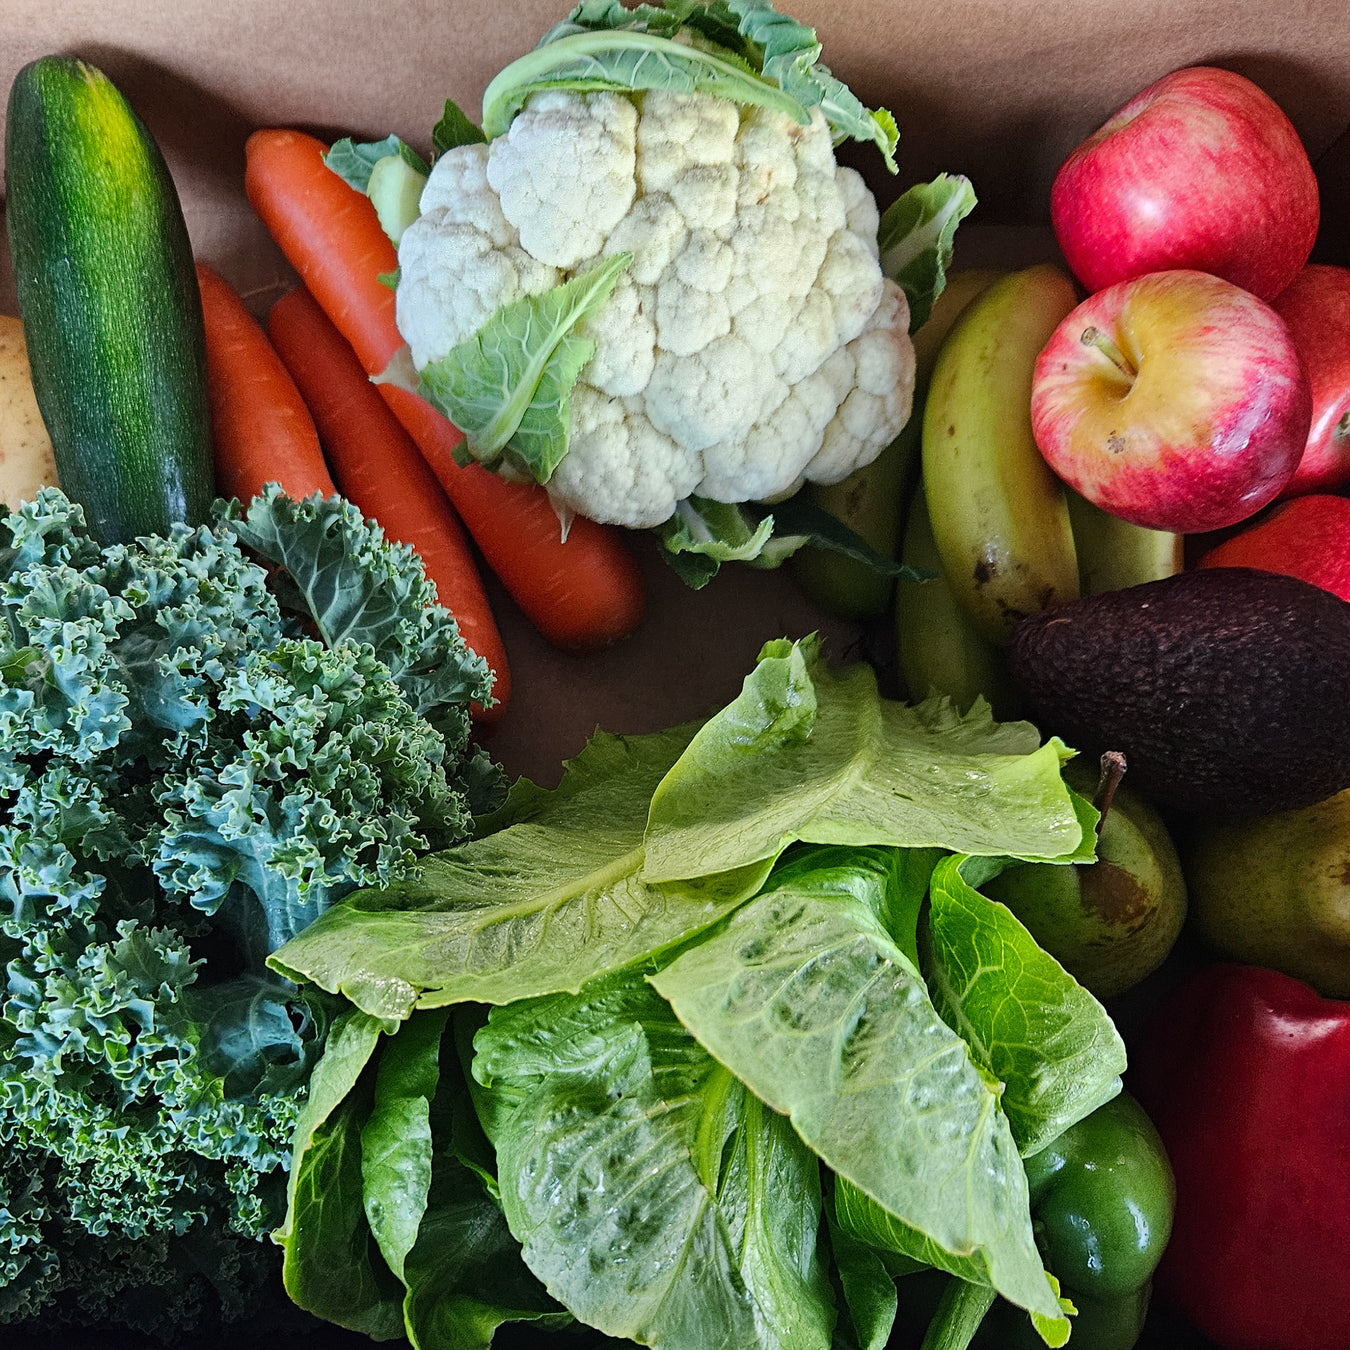 Organic Fruit & Veg Boxes